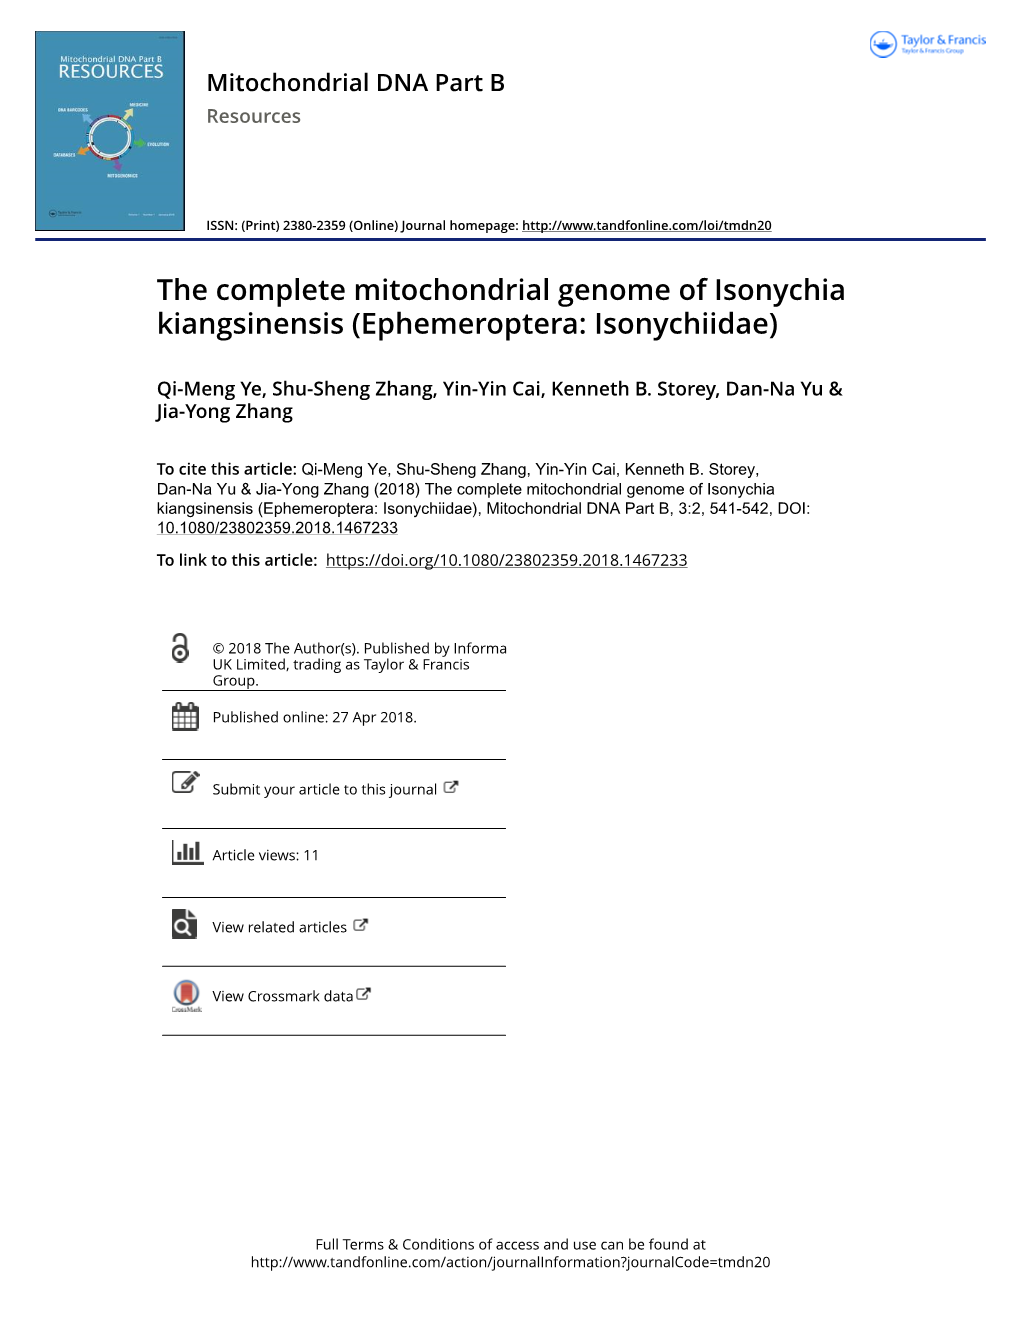 The Complete Mitochondrial Genome of Isonychia Kiangsinensis (Ephemeroptera: Isonychiidae)